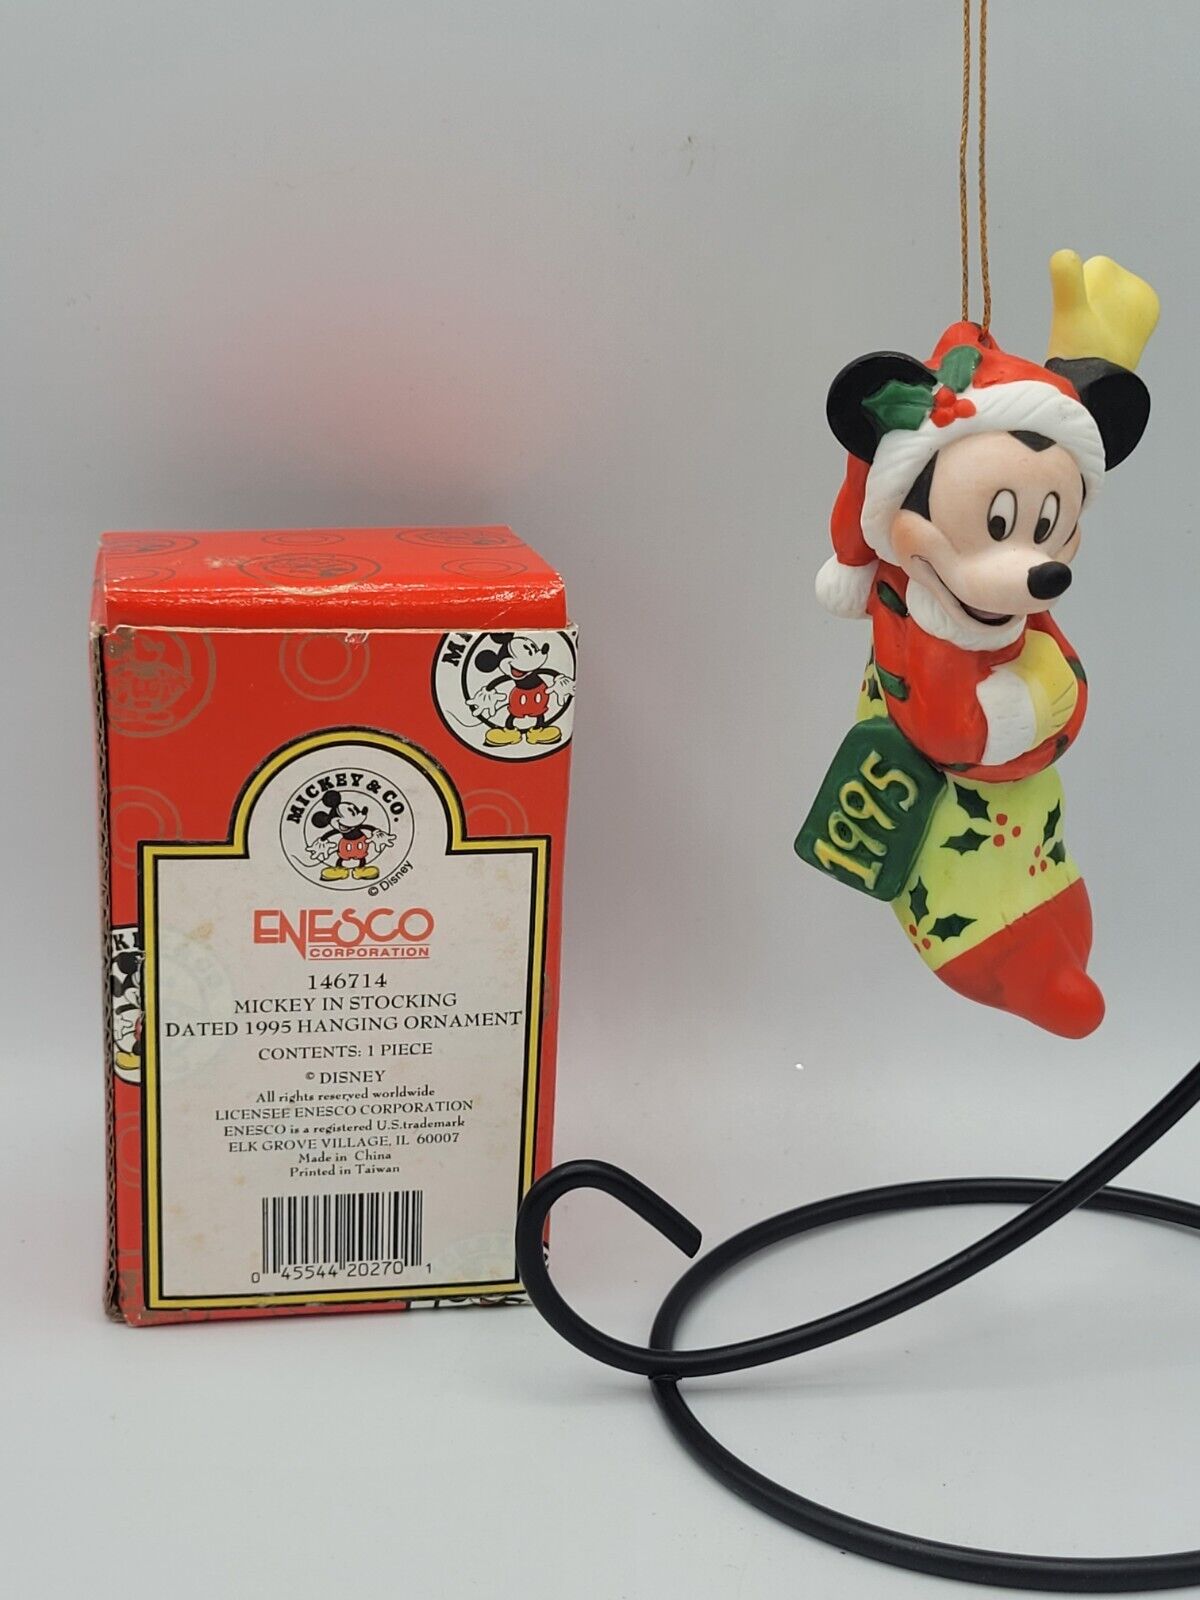 Enesco Christmas Ornament - Mickey in Stocking - 1995 - MIB